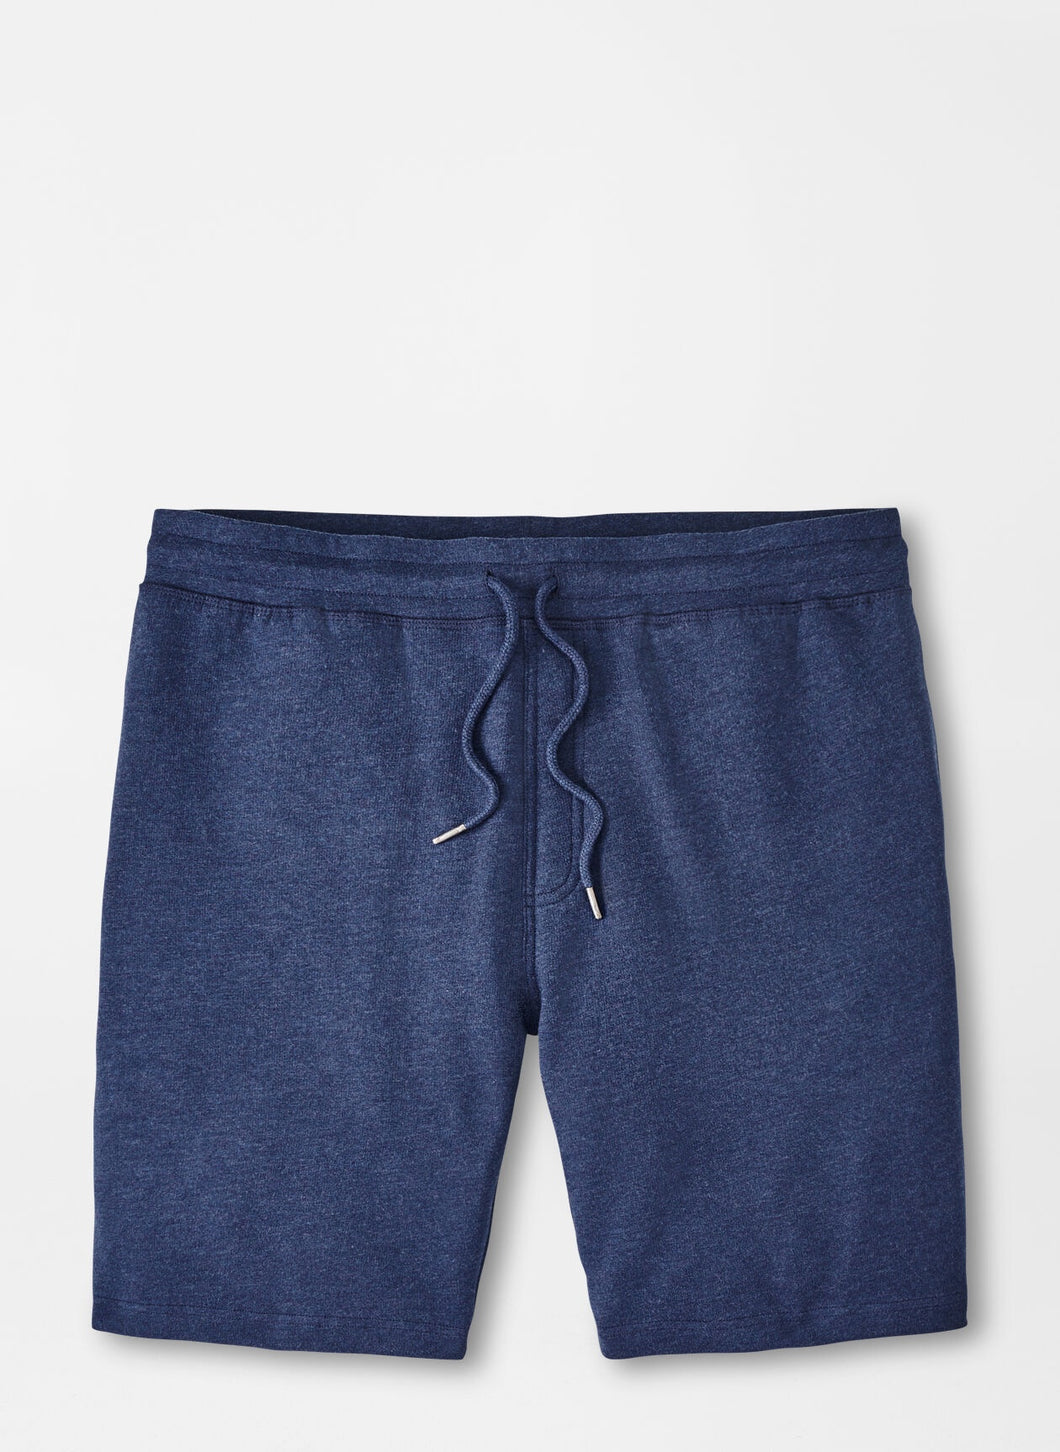 Peter Millar - Lava Wash Shorts - Blue